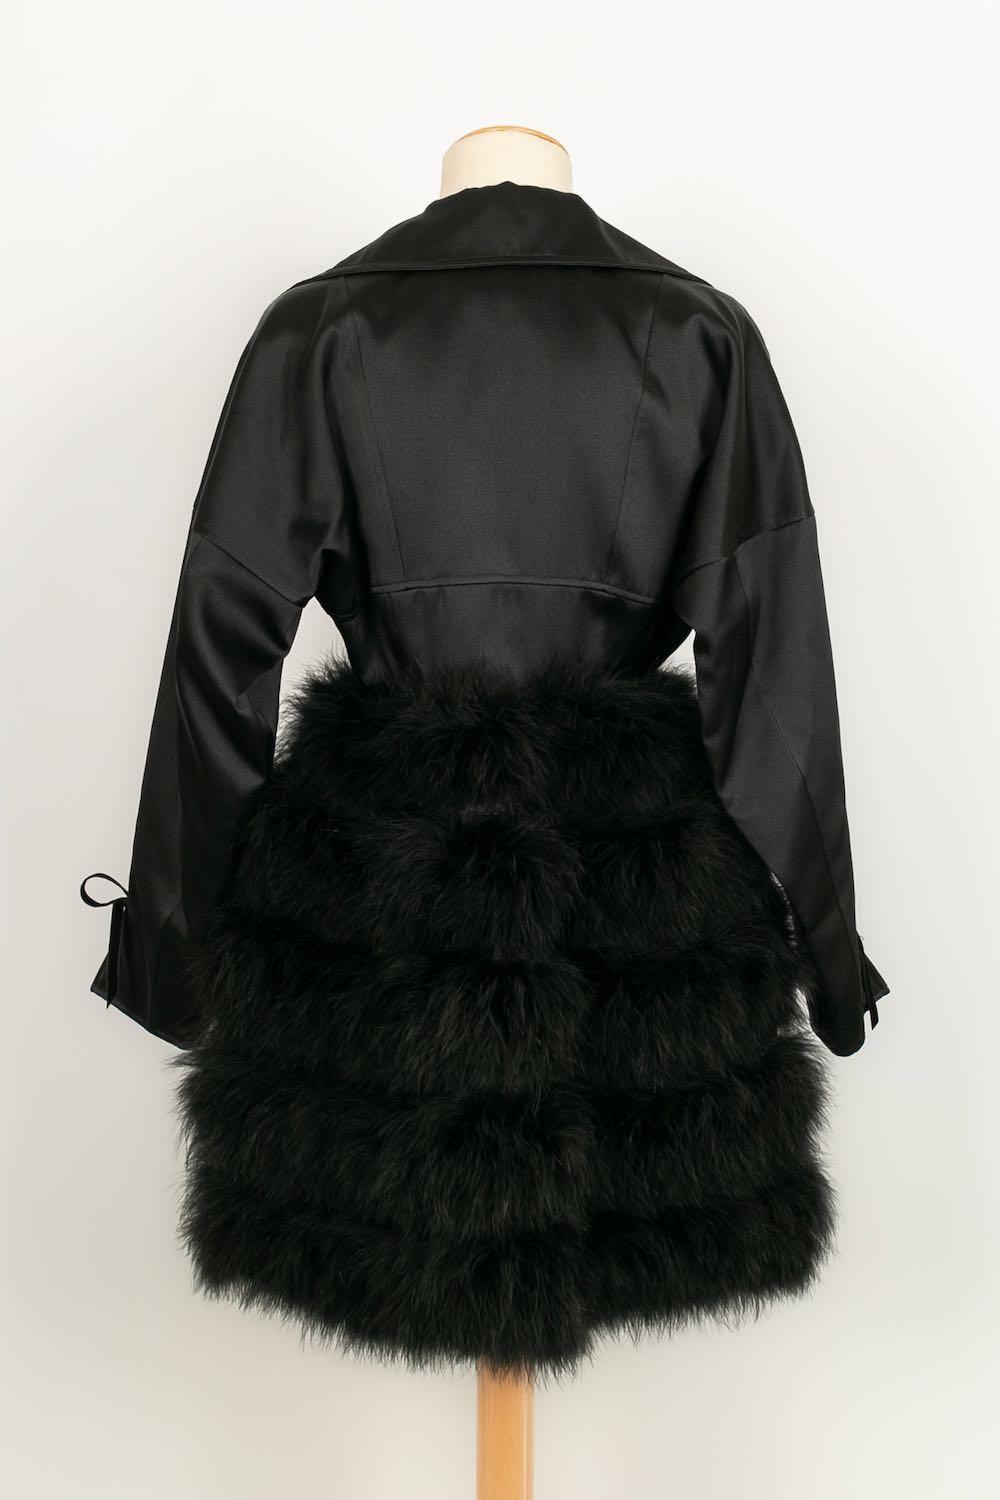 Claude Montana Black Satin and Marabou Feather Coat, 1993 In Excellent Condition For Sale In SAINT-OUEN-SUR-SEINE, FR